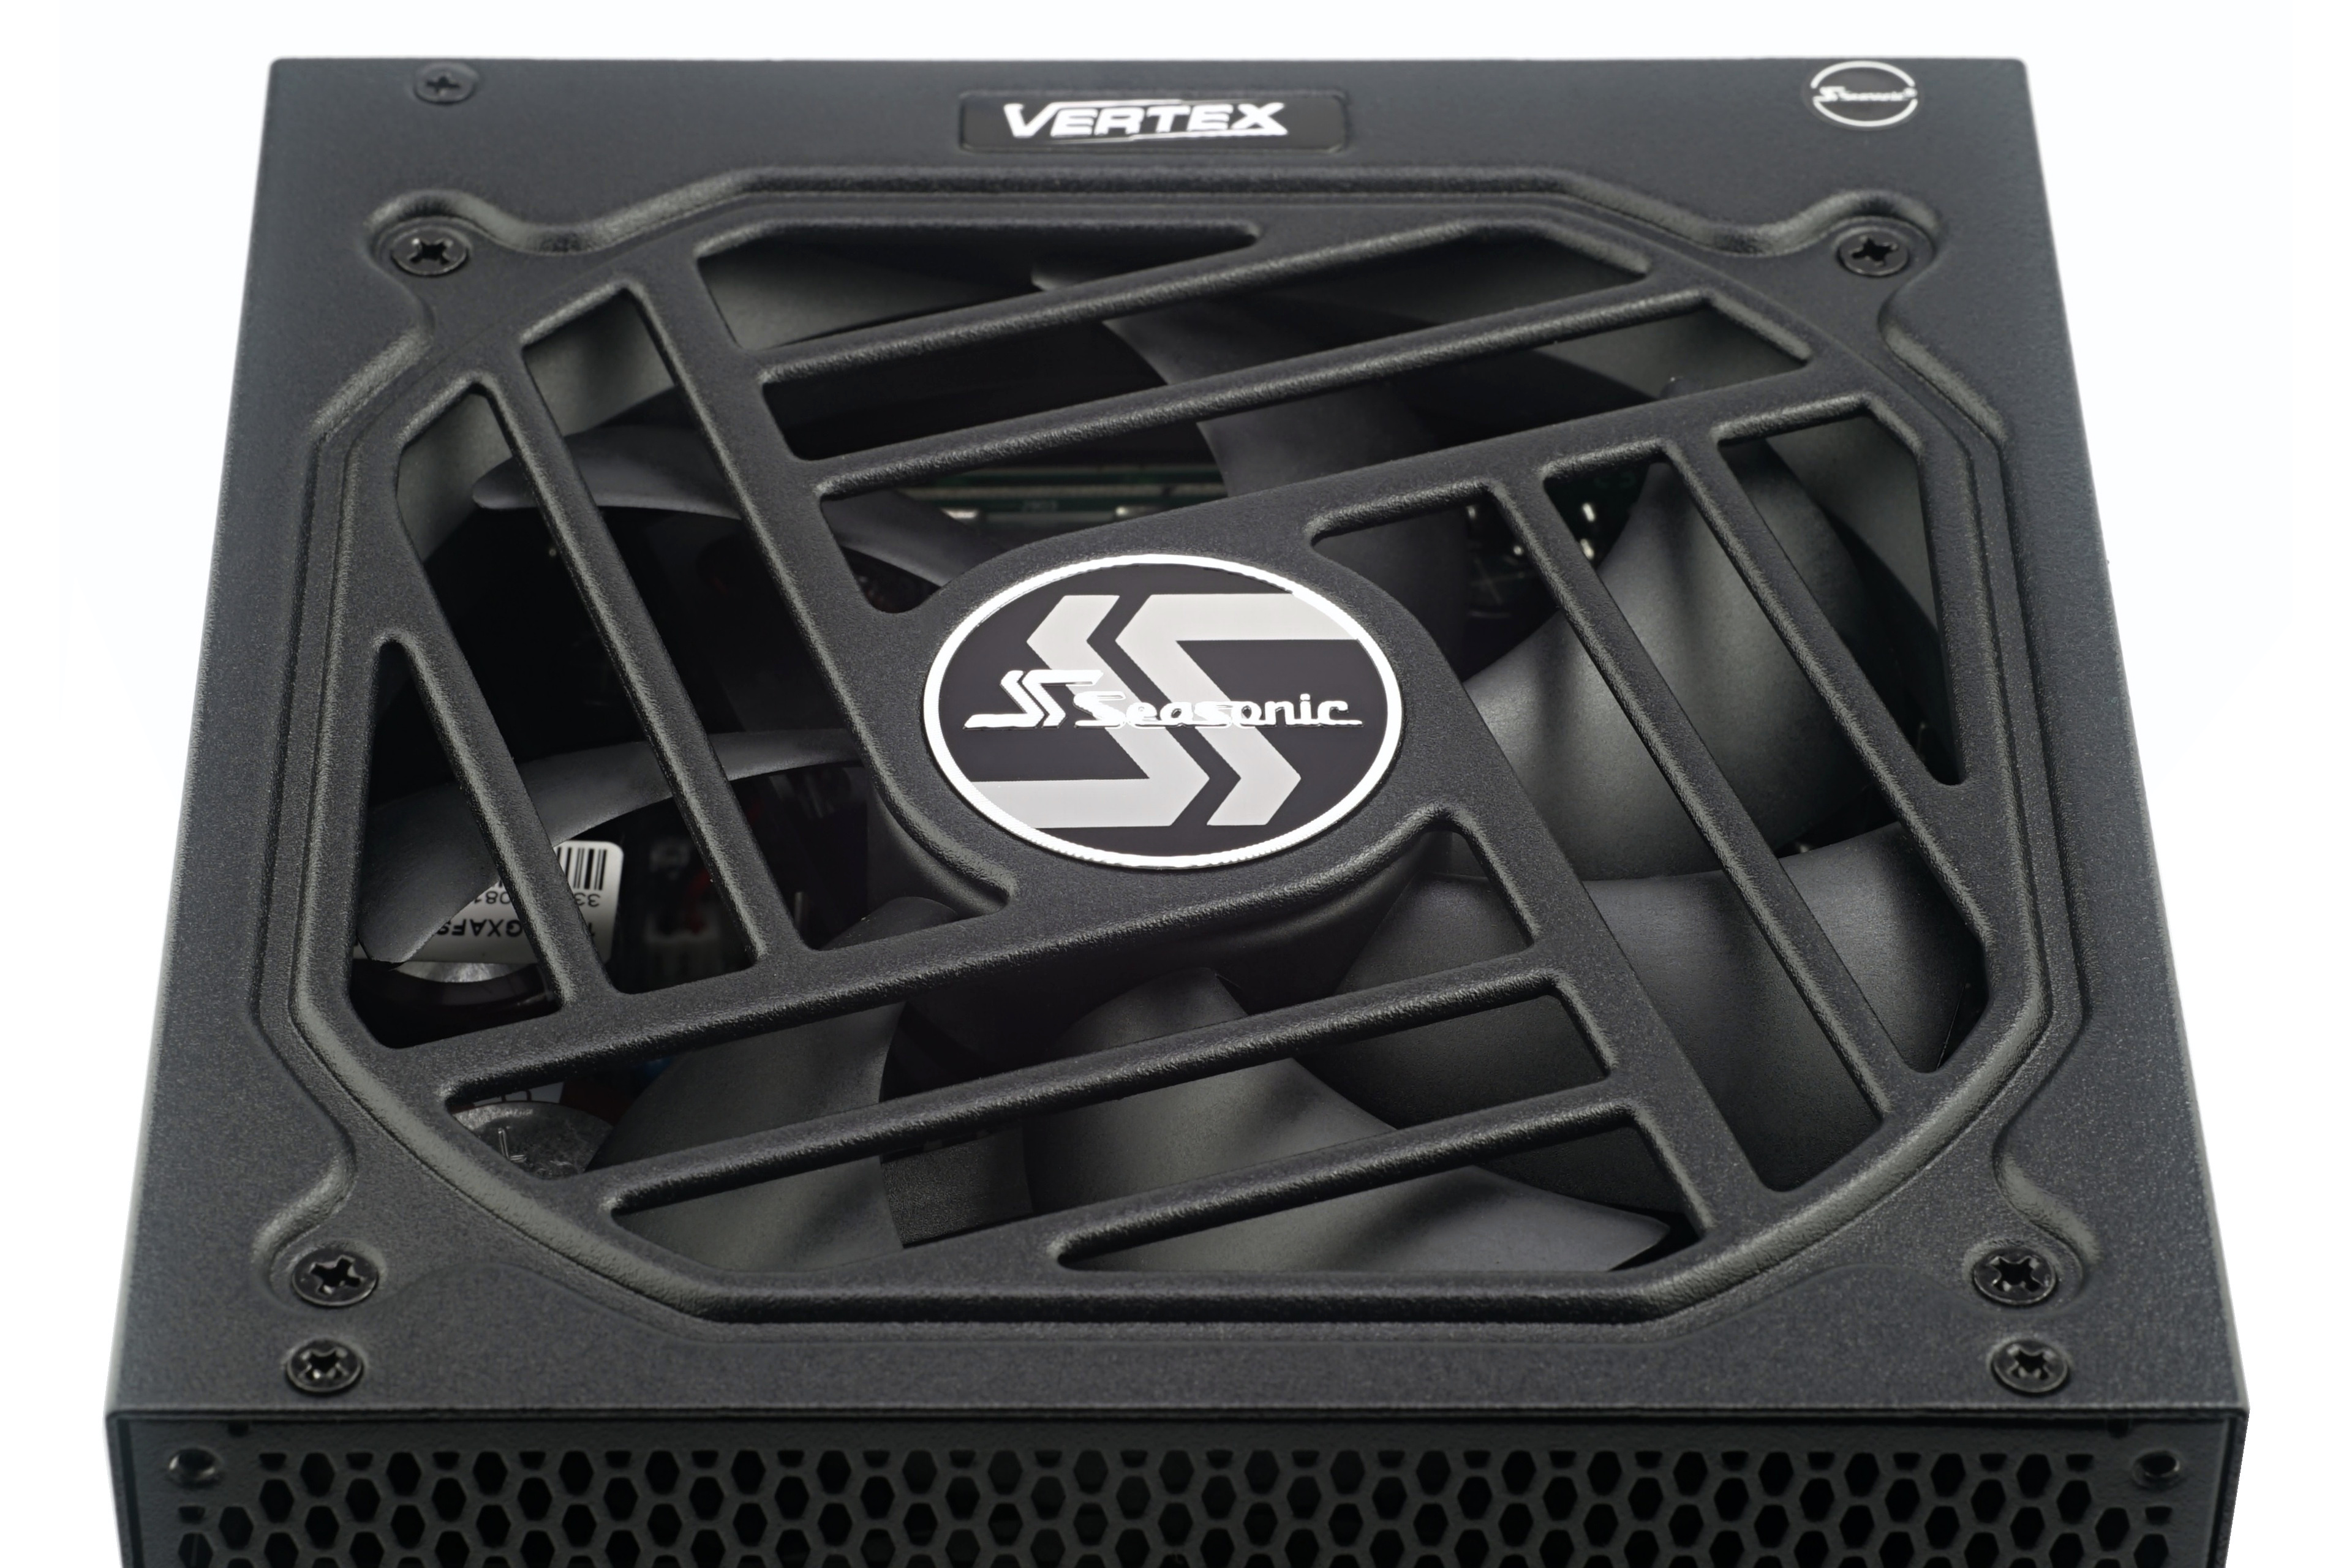 Seasonic Vertex GX-850 Power Supply Review